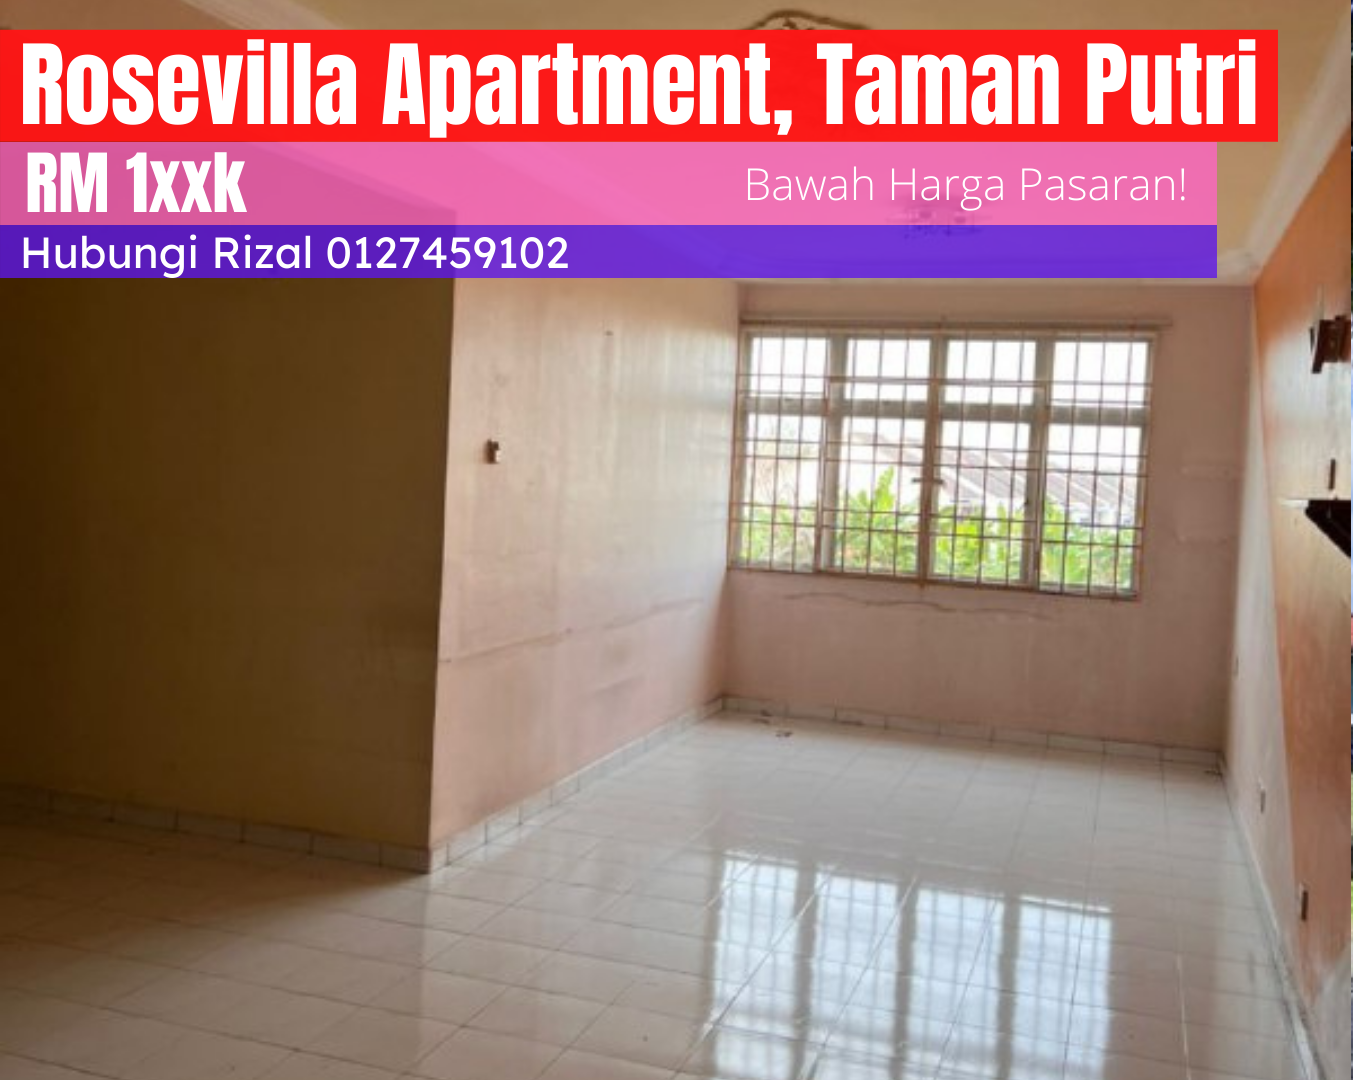 Rosevilla Apartment, Taman Putri, Kulai. Johor